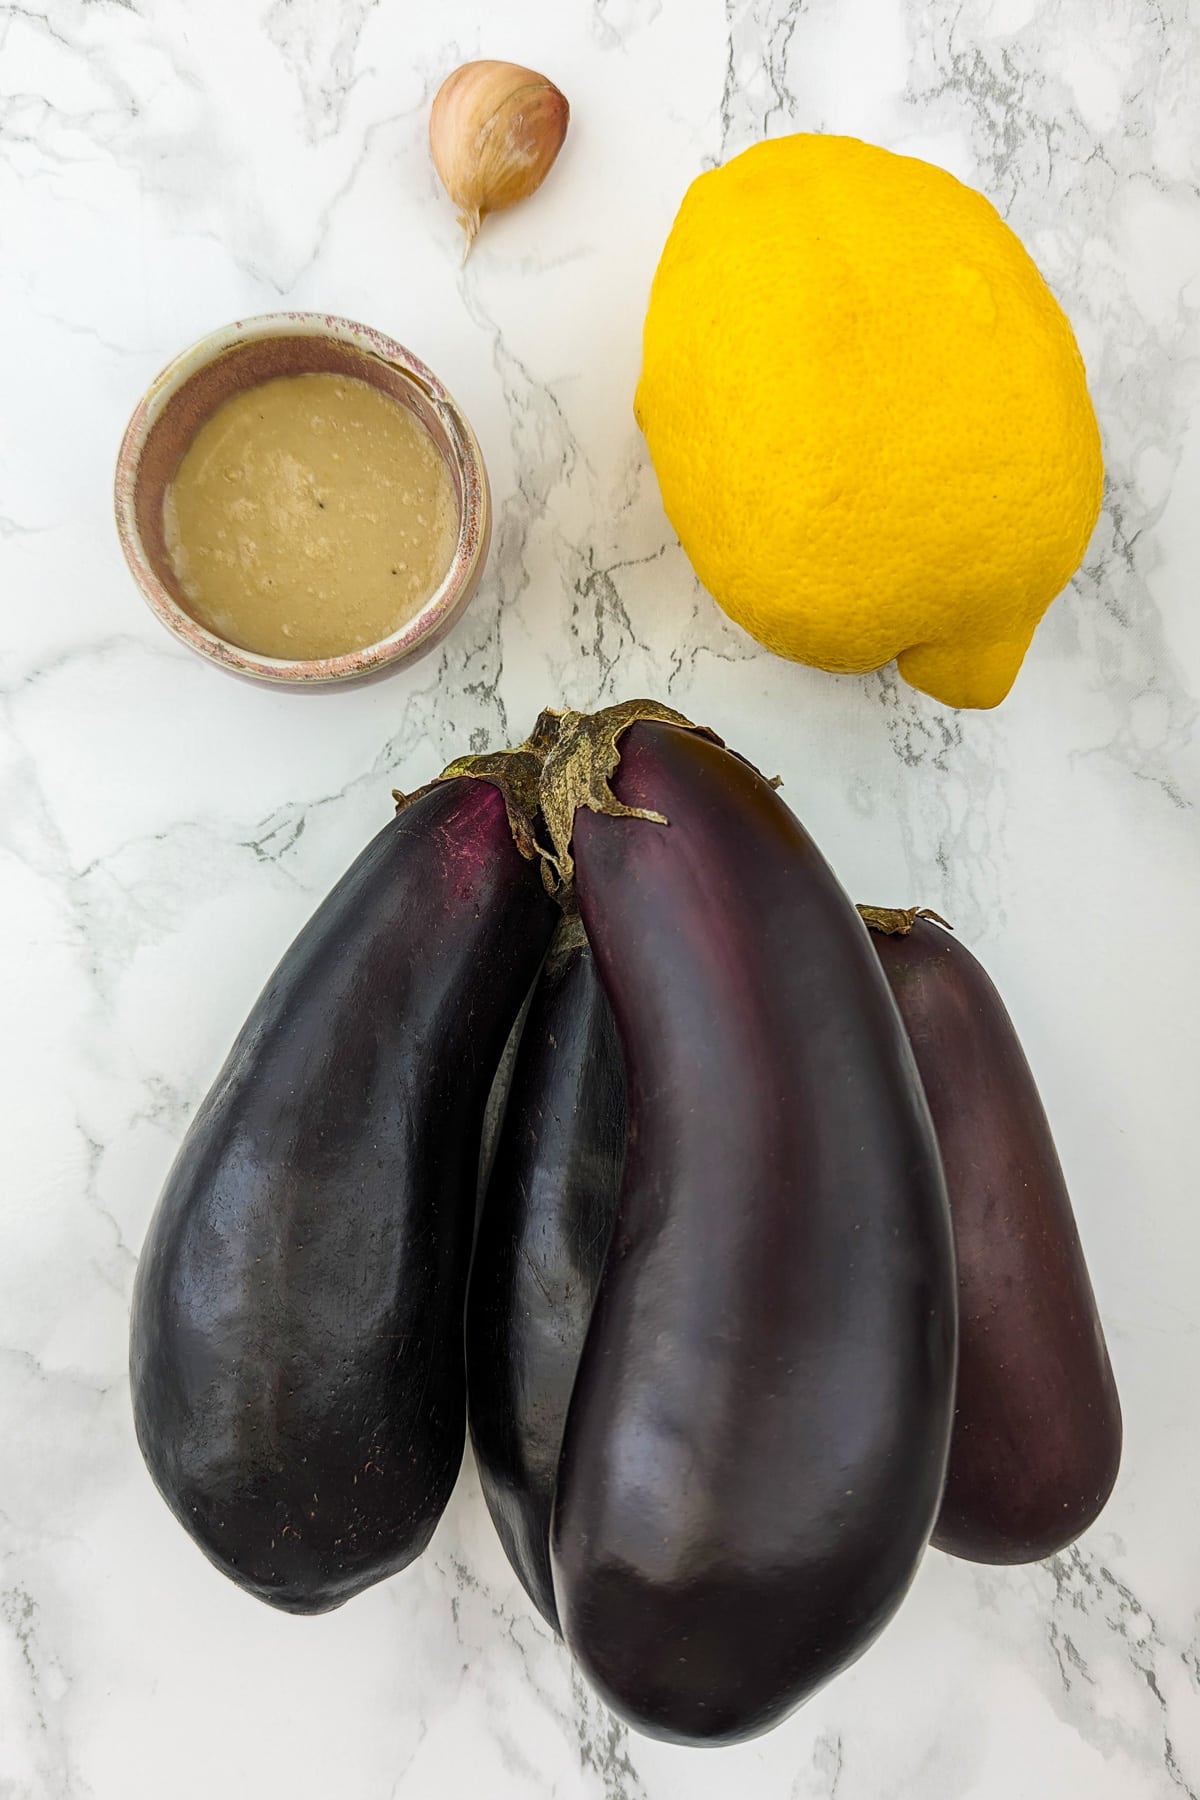 4 eggplants, lemon, tahini and garlic clove on a white marble table.